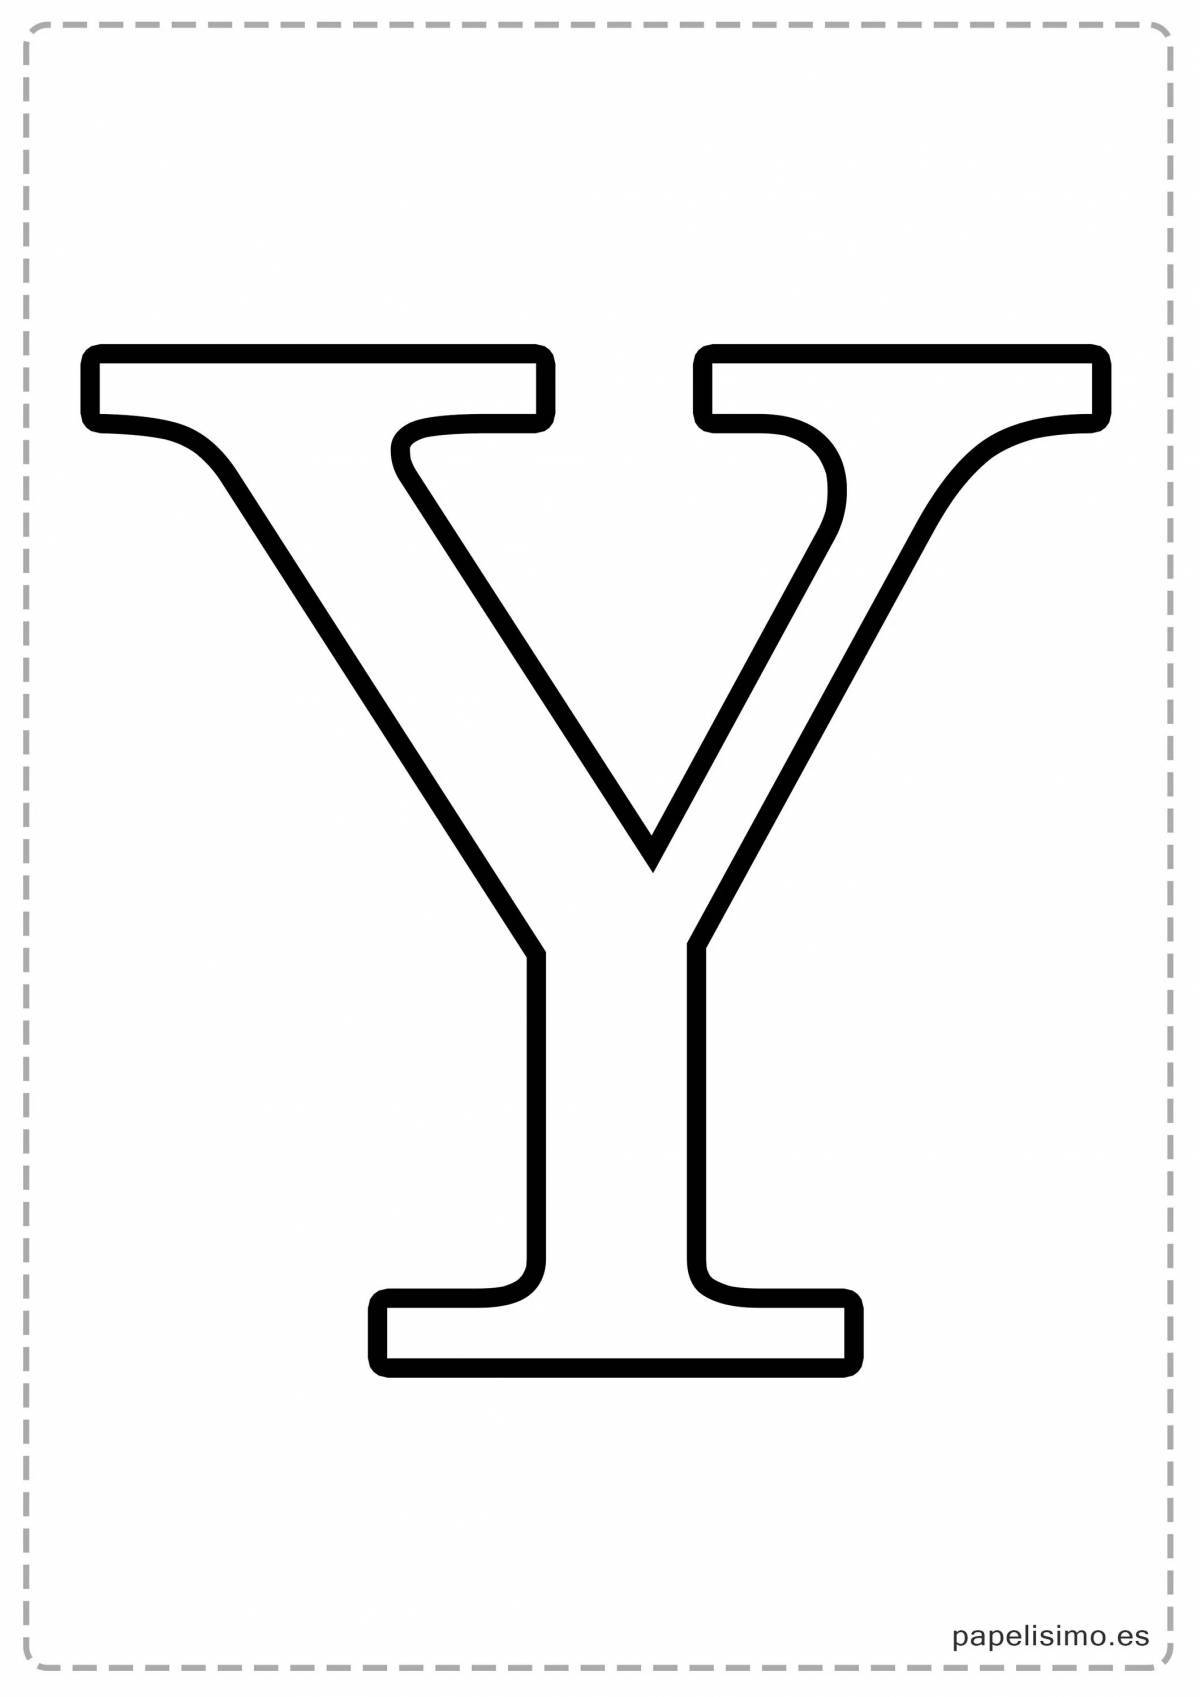 Буквы казахского алфавита #4